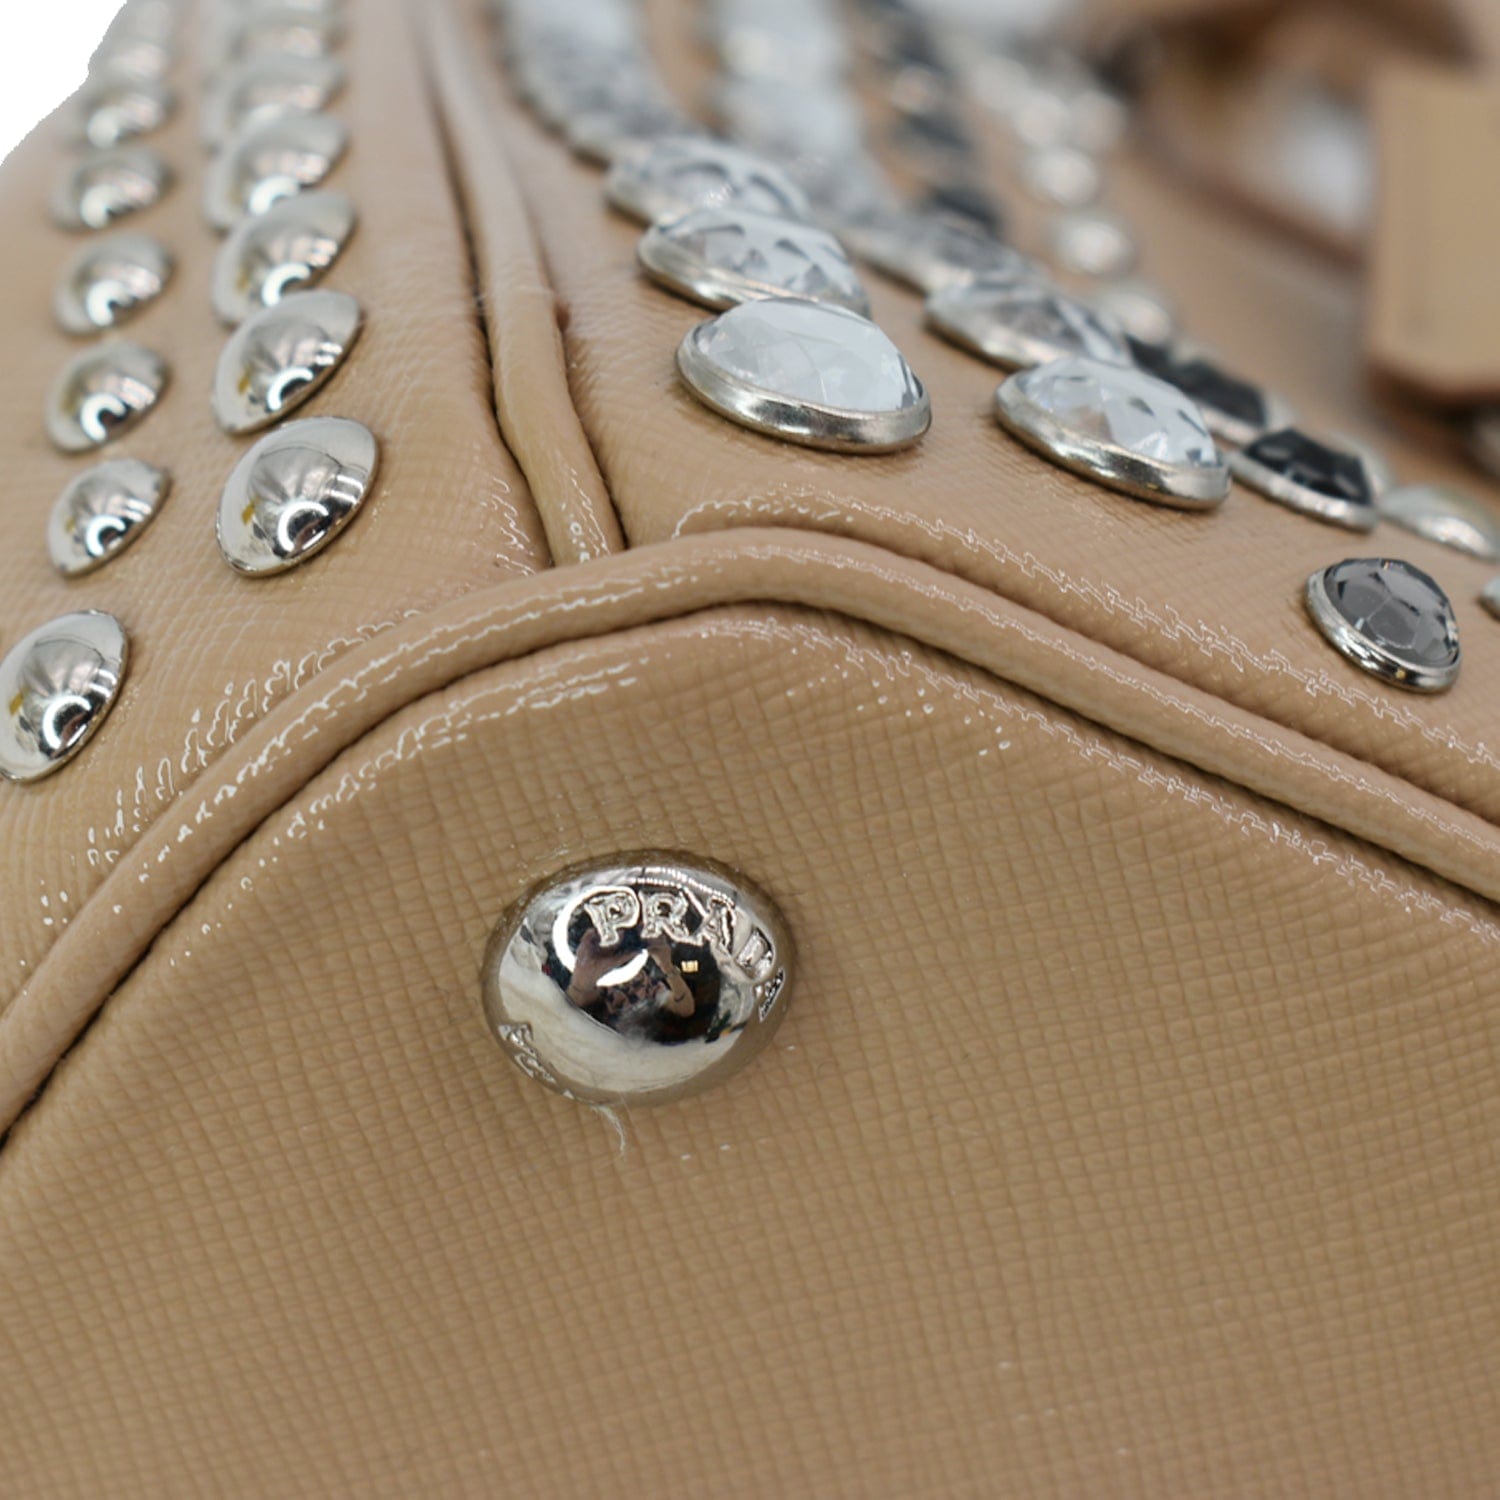 Prada Women's Glace Leather Shoulder Bag